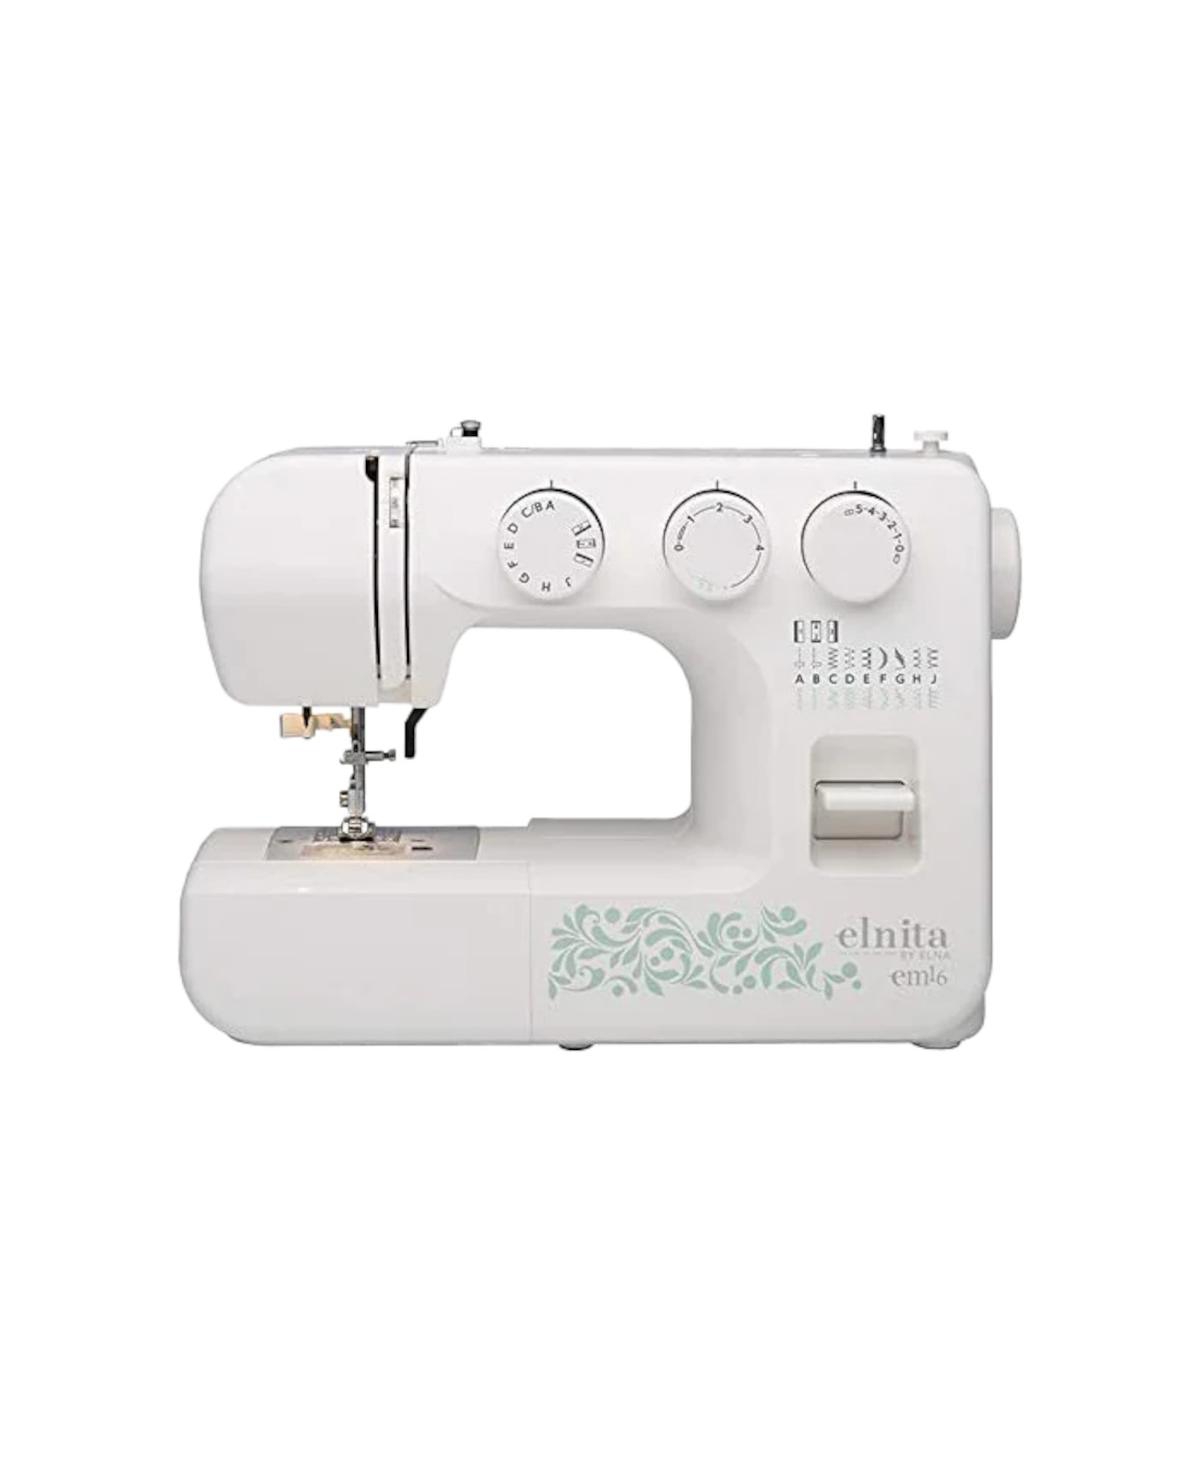 Elnita EM16 Sewing Machine - White